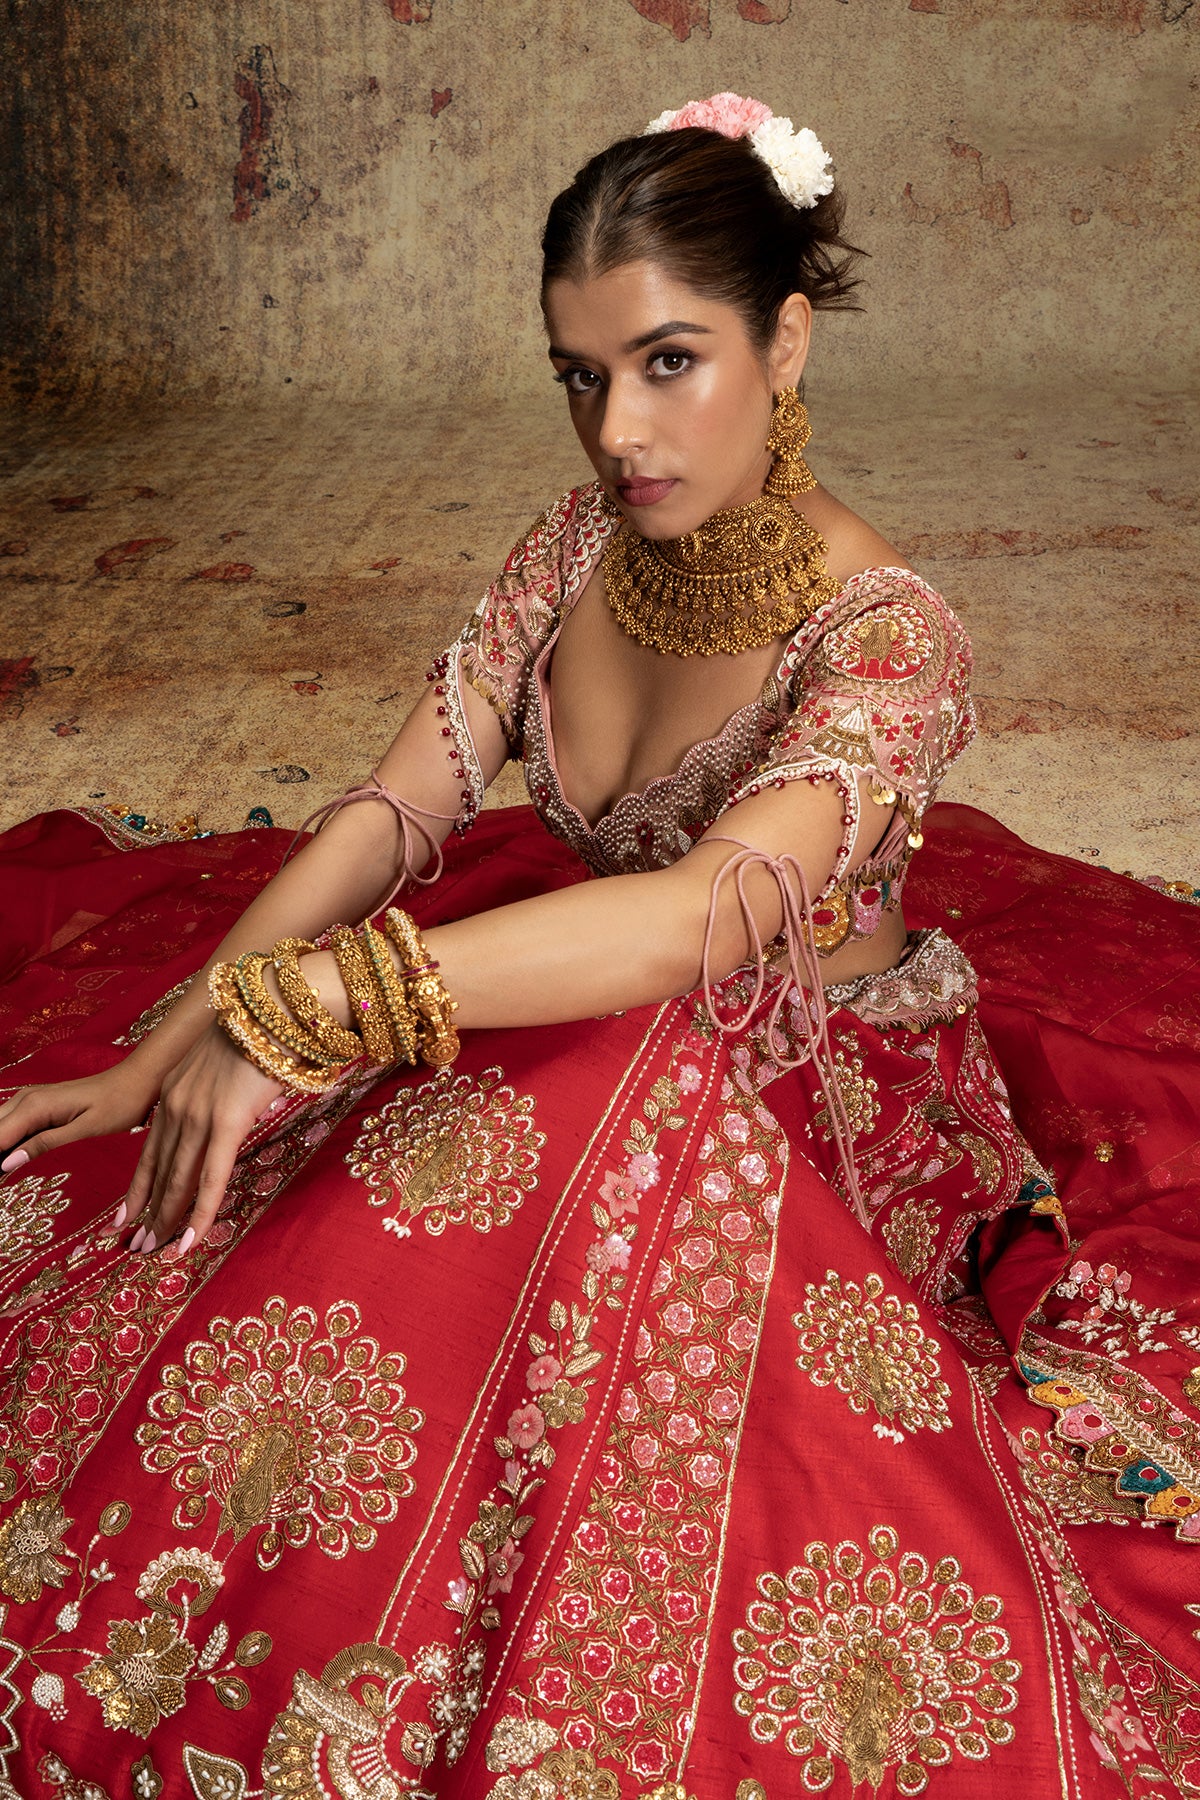 Red, Golden Bridal Embroidered Designer Lehenga at Rs 15000 in Delhi